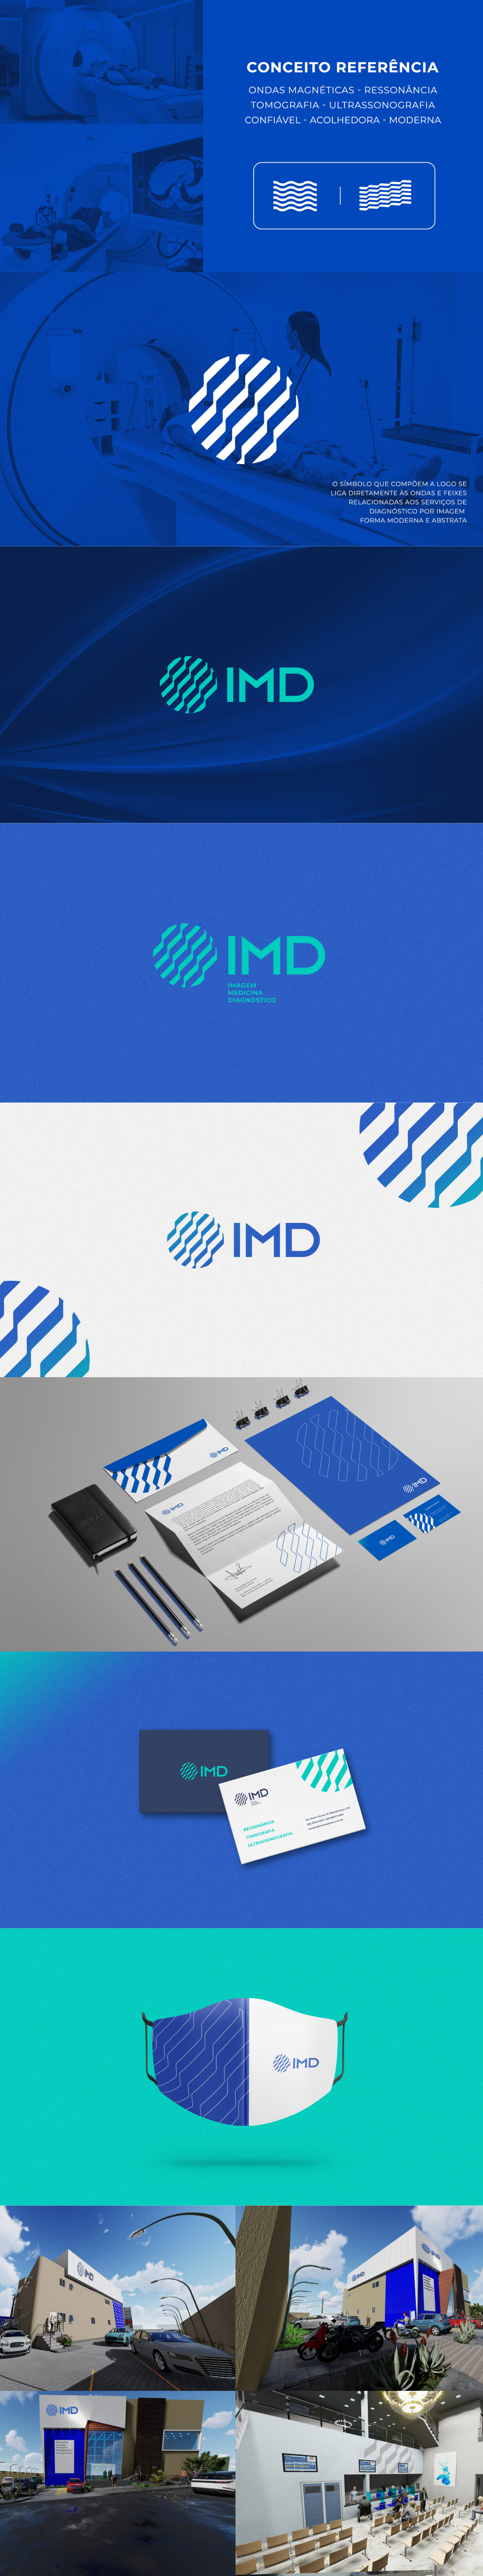 Re.brand – IMD